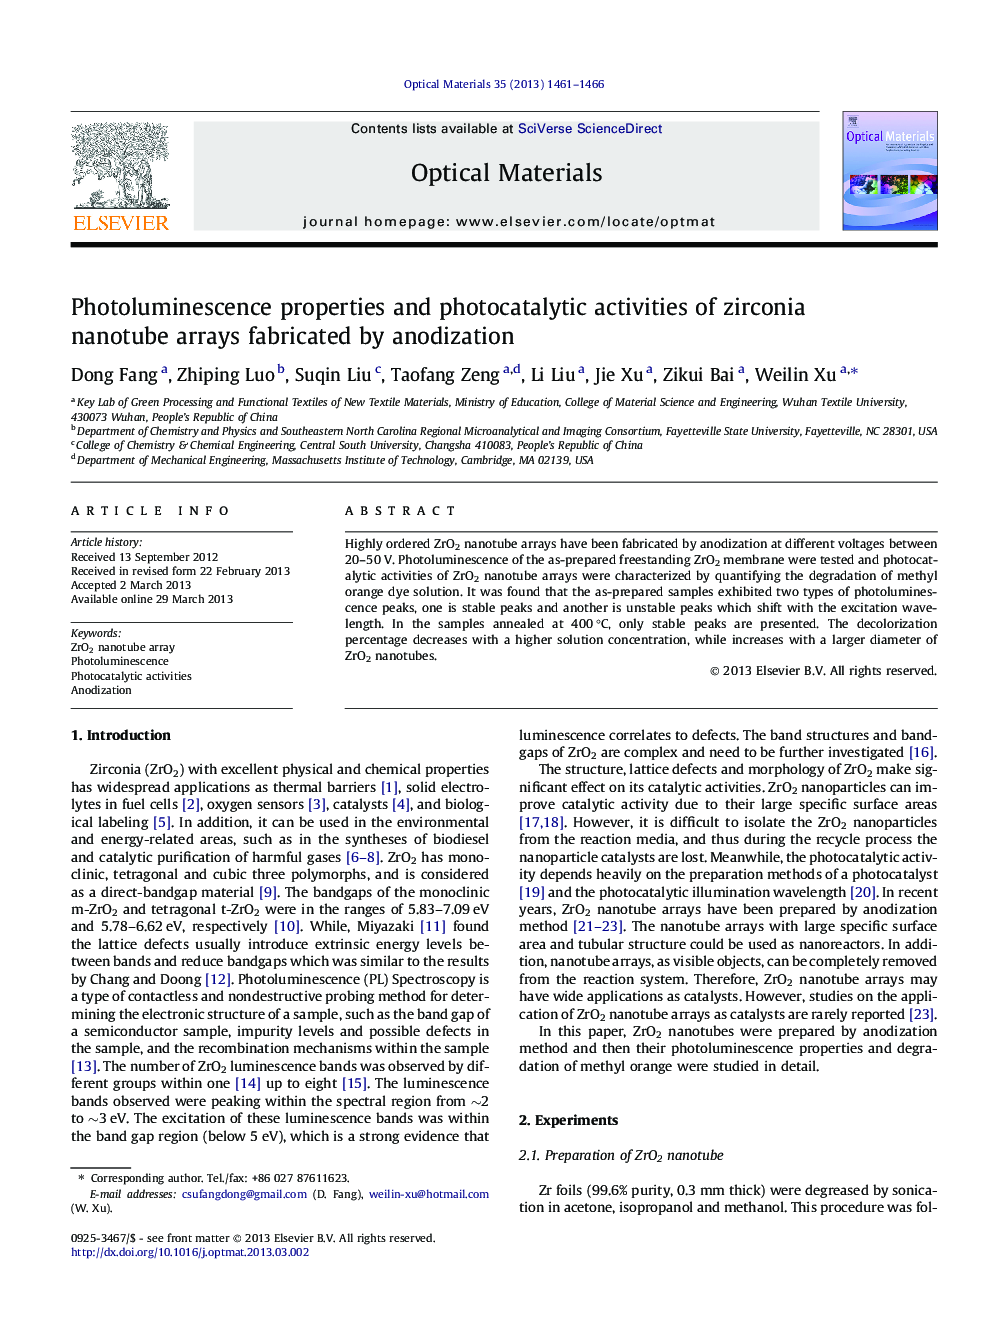 Photoluminescence properties and photocatalytic activities of zirconia nanotube arrays fabricated by anodization